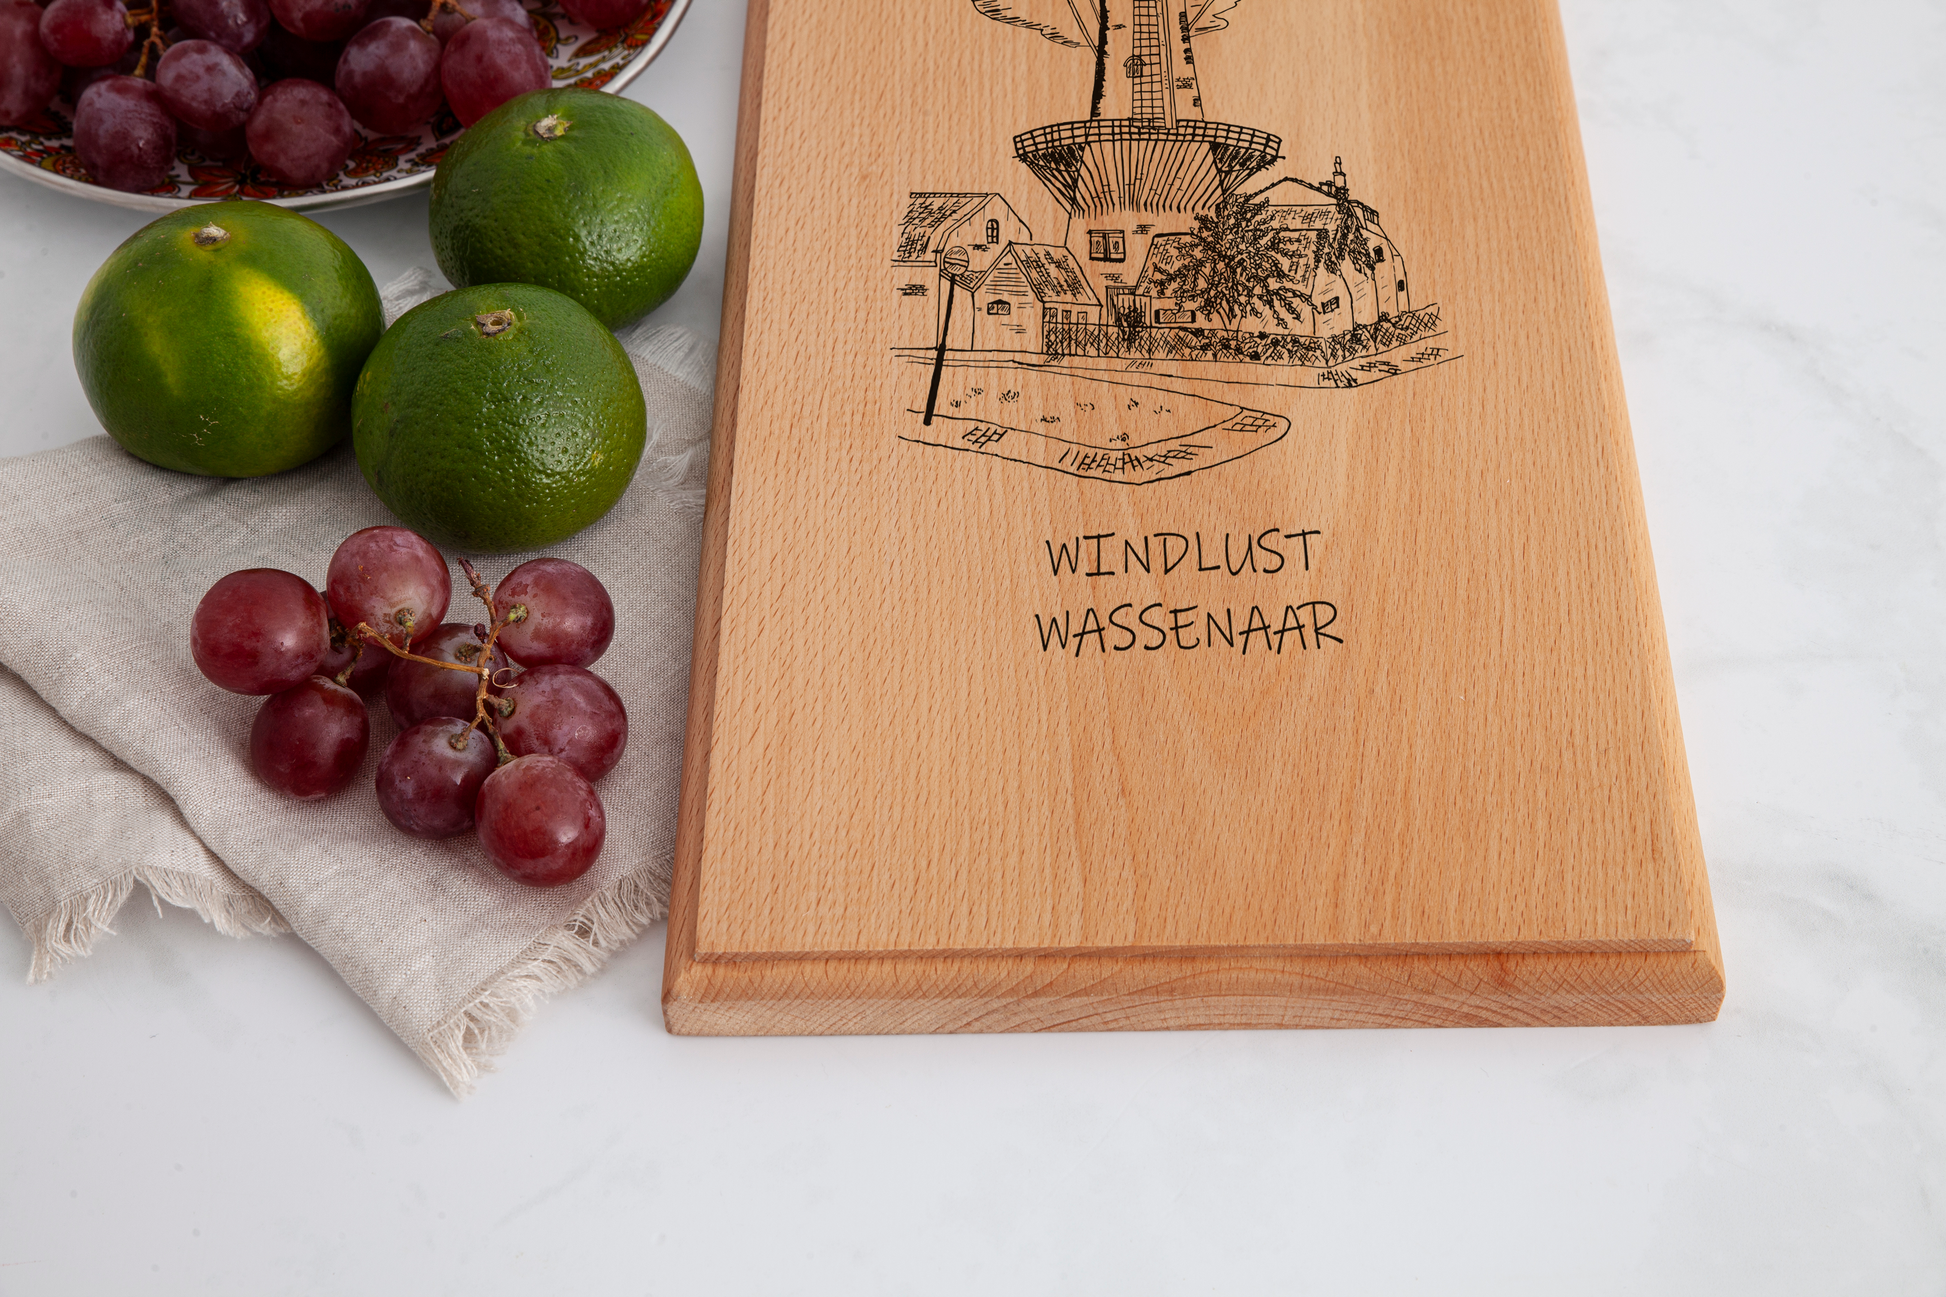 Wassenaar, Windlust, medium serving board, wood grain